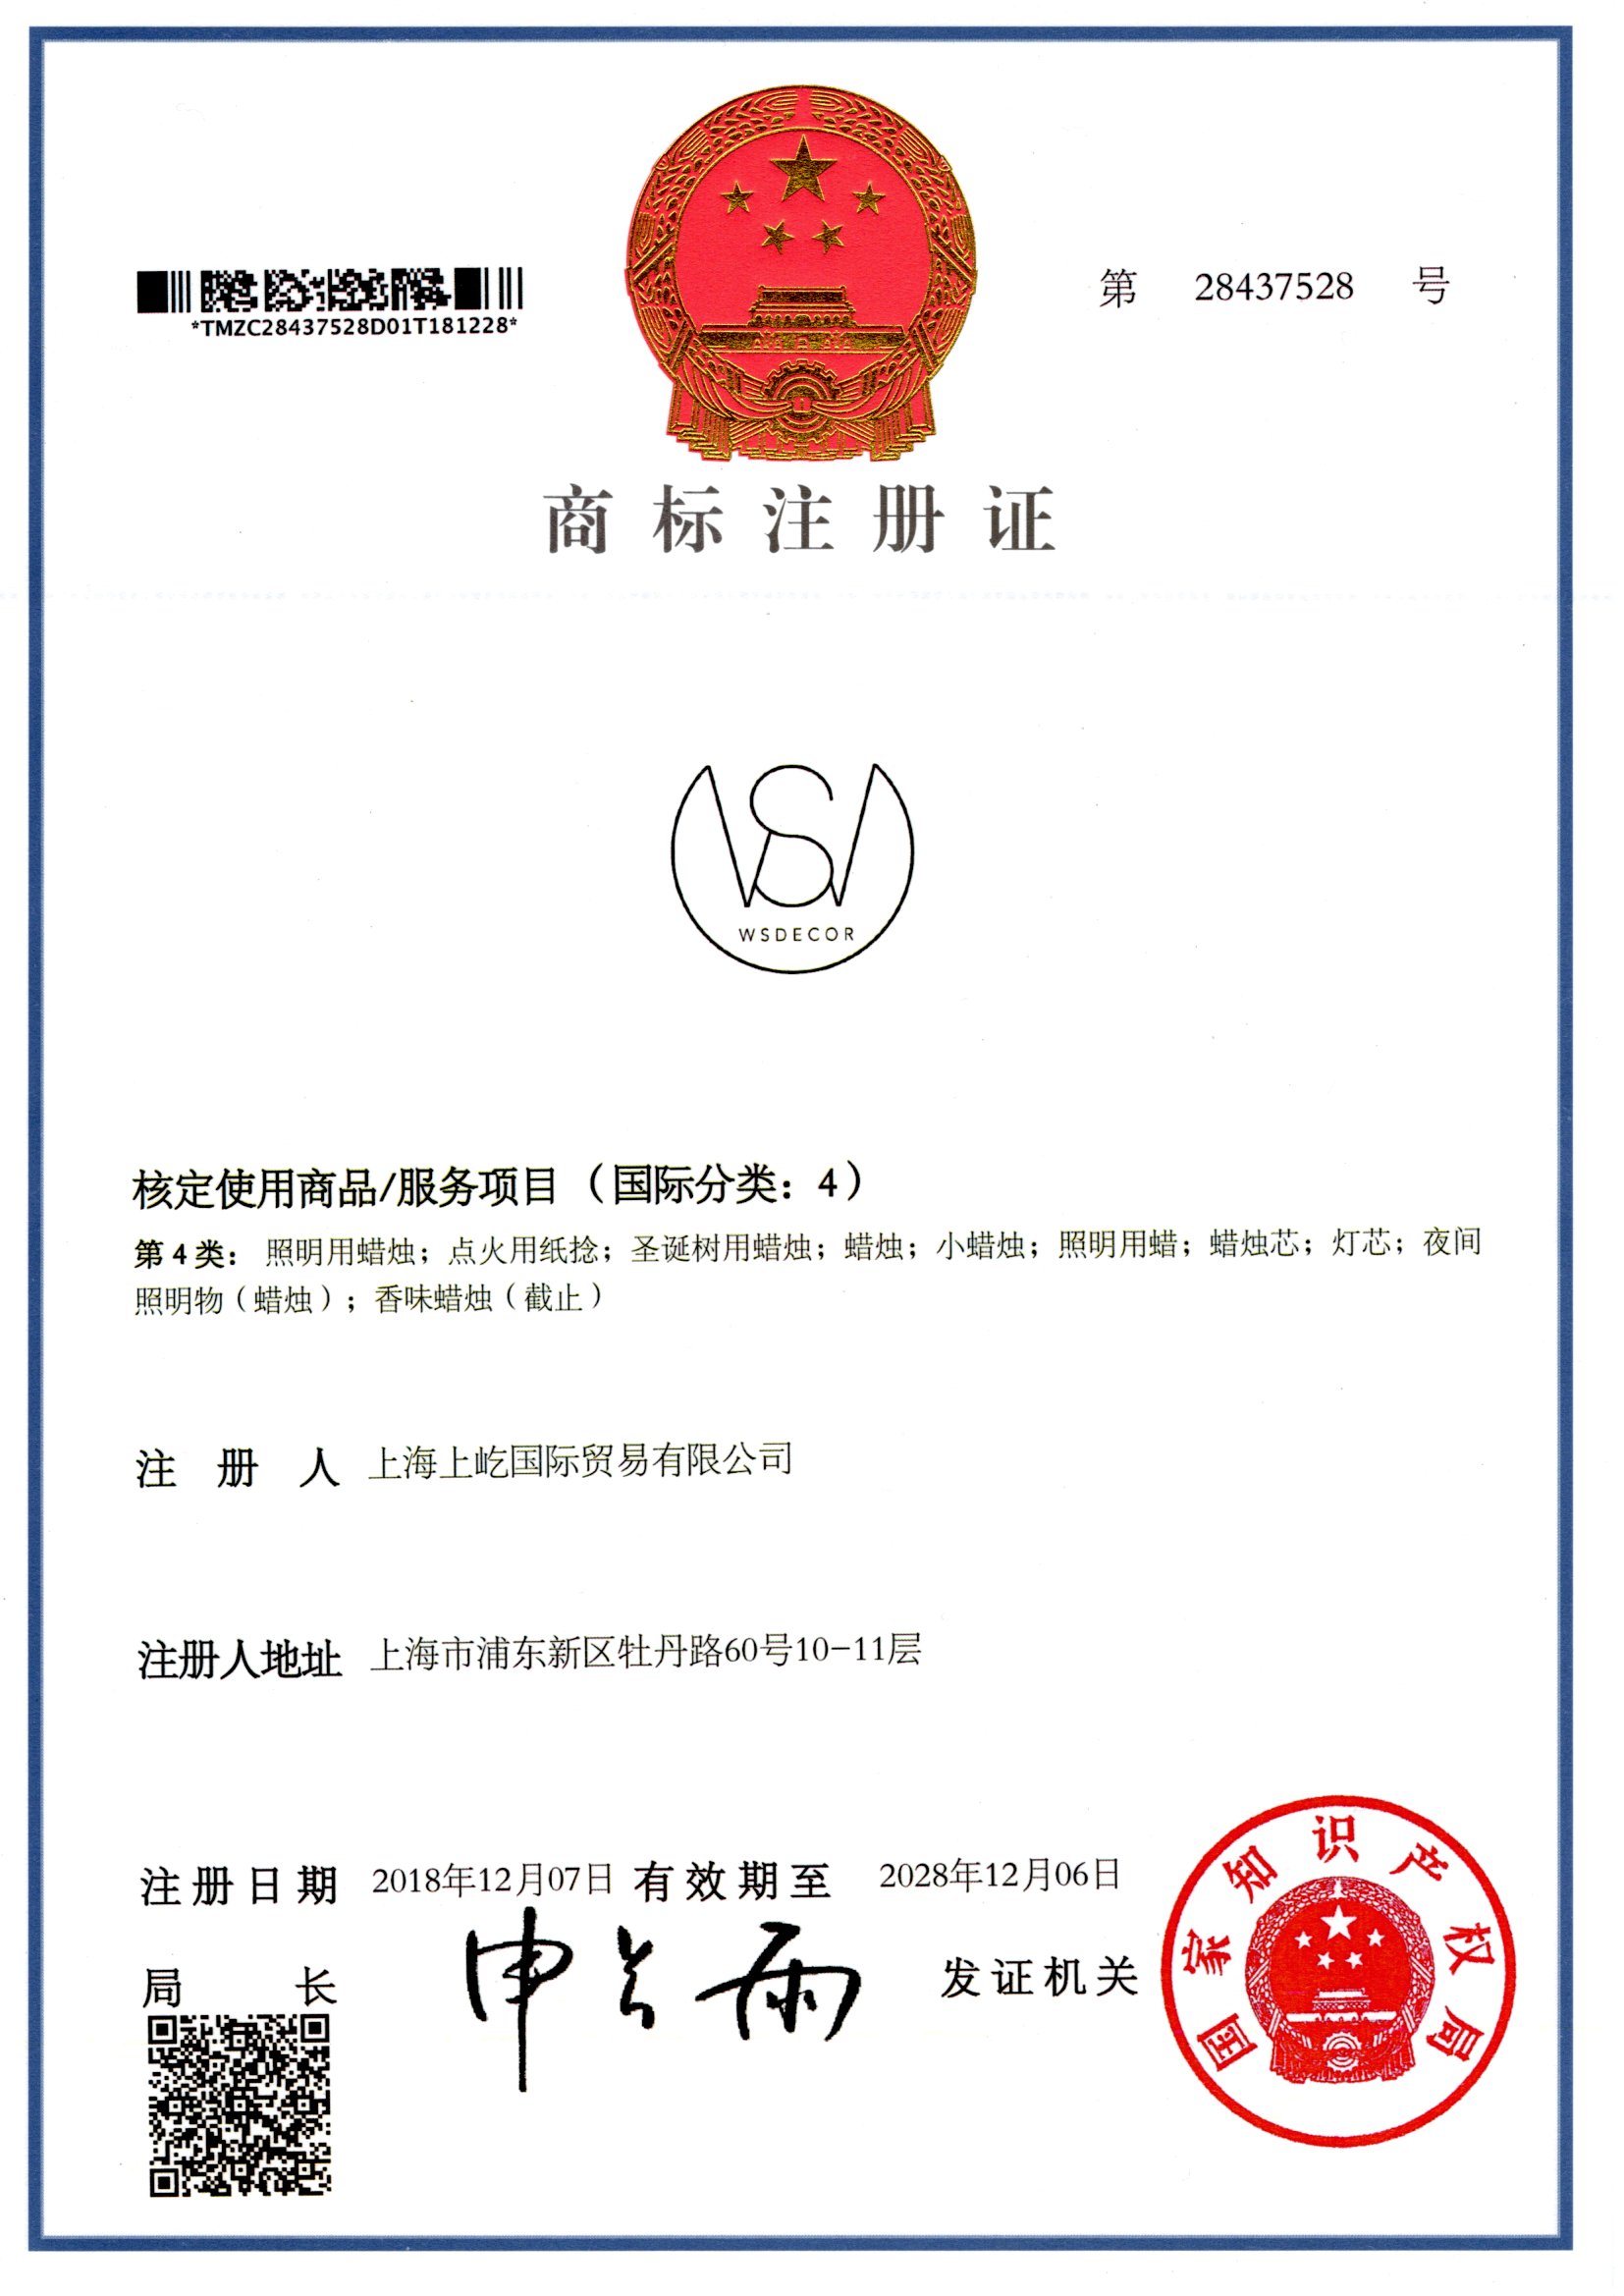 Trademark registration certificate No. 28437528